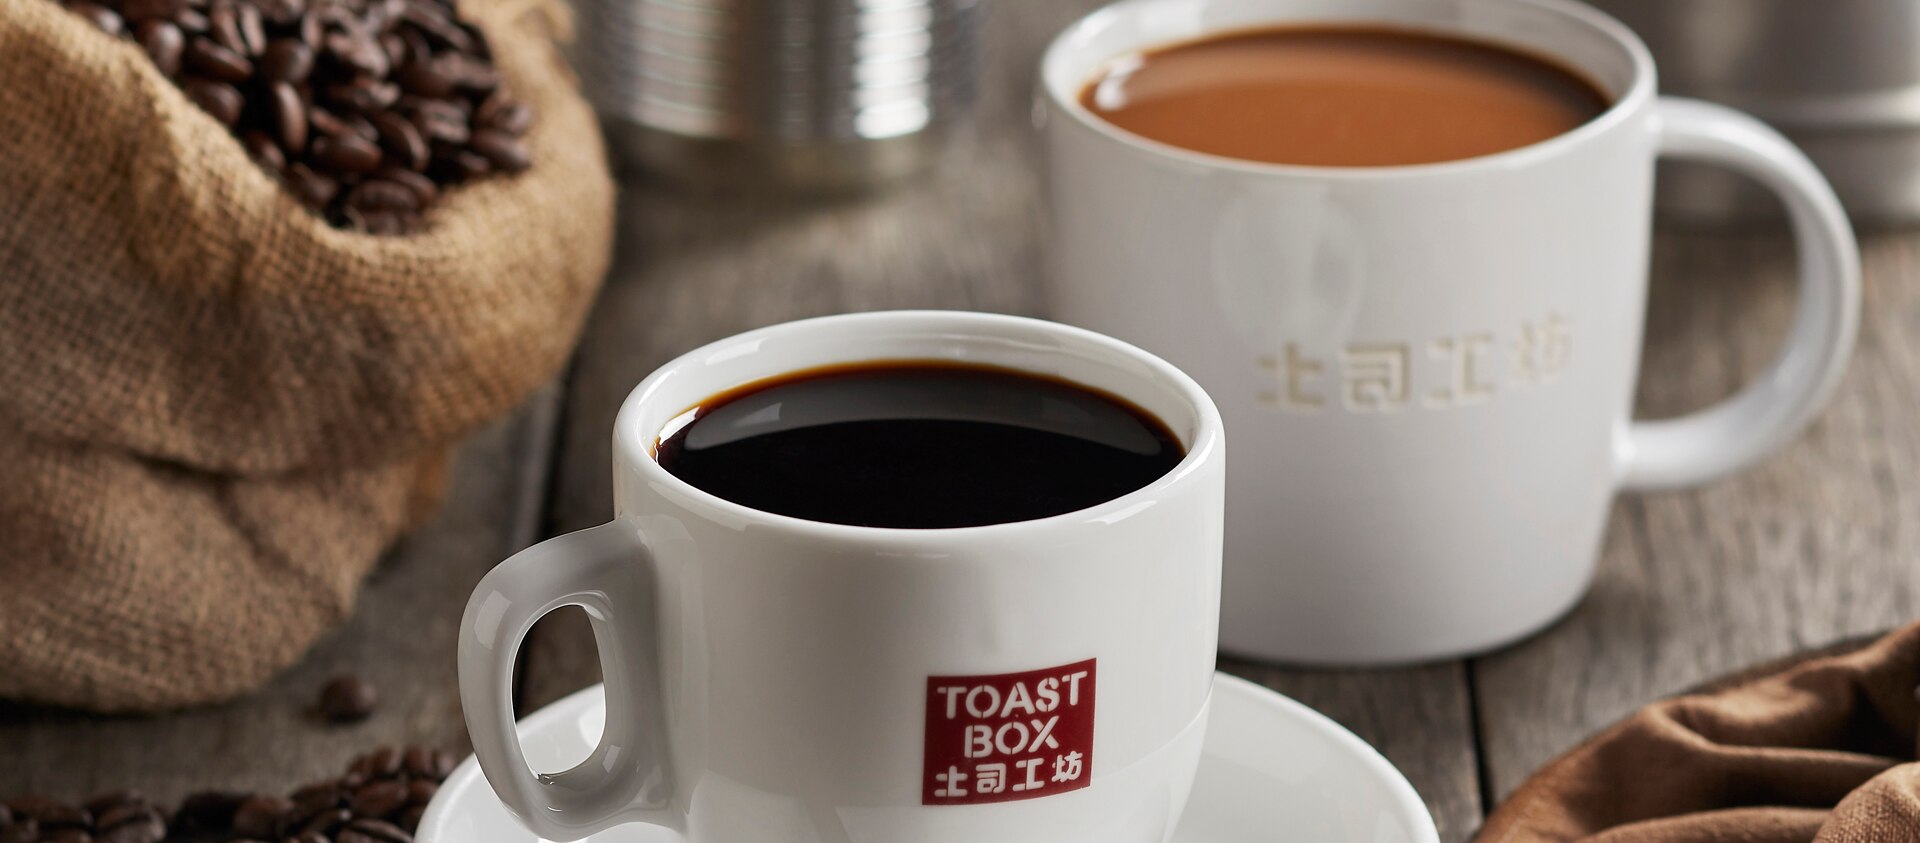 Toast Box, Coffee